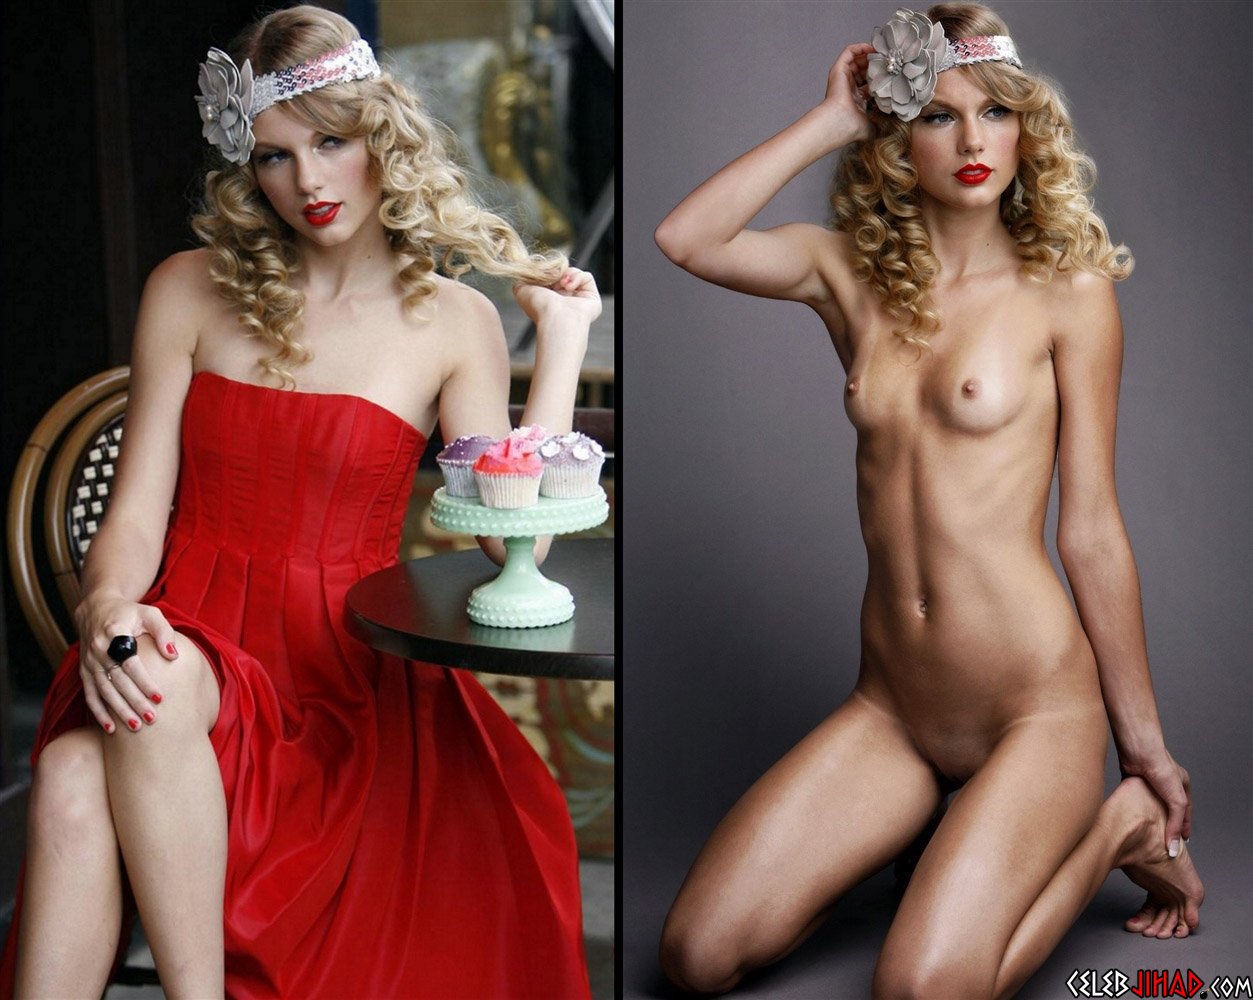 Taylor Swift Nude "Cute Mode Slut Mode" Photo Shoot.